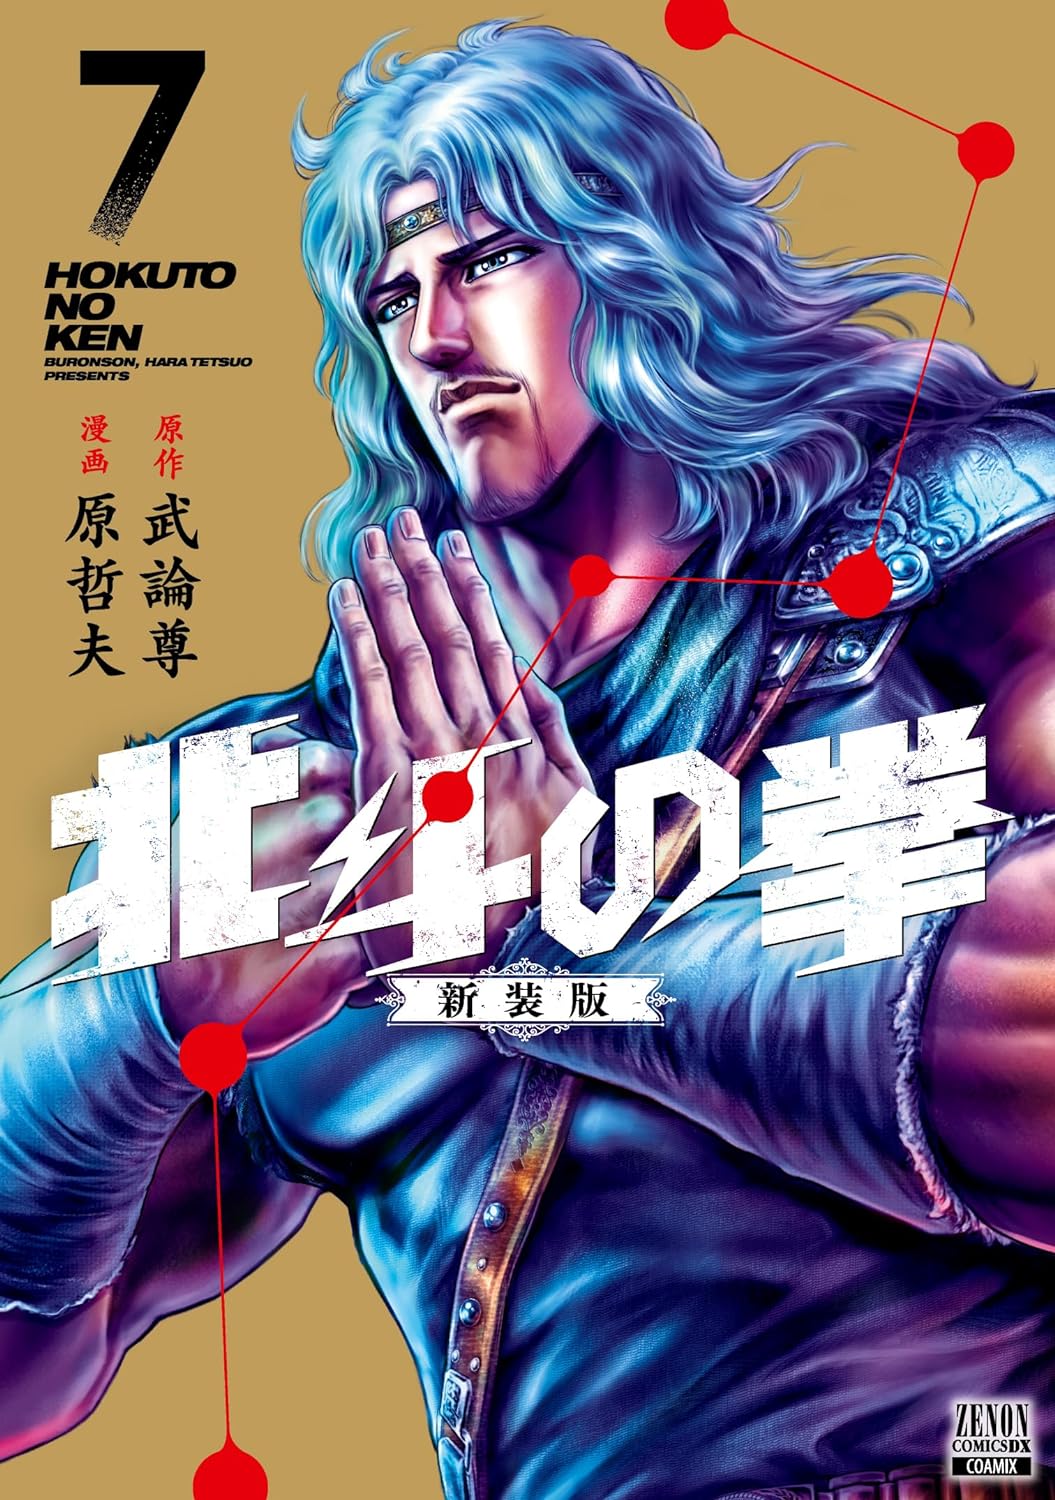 Hokuto no Ken (Fist of the North Star) #7  / Comic